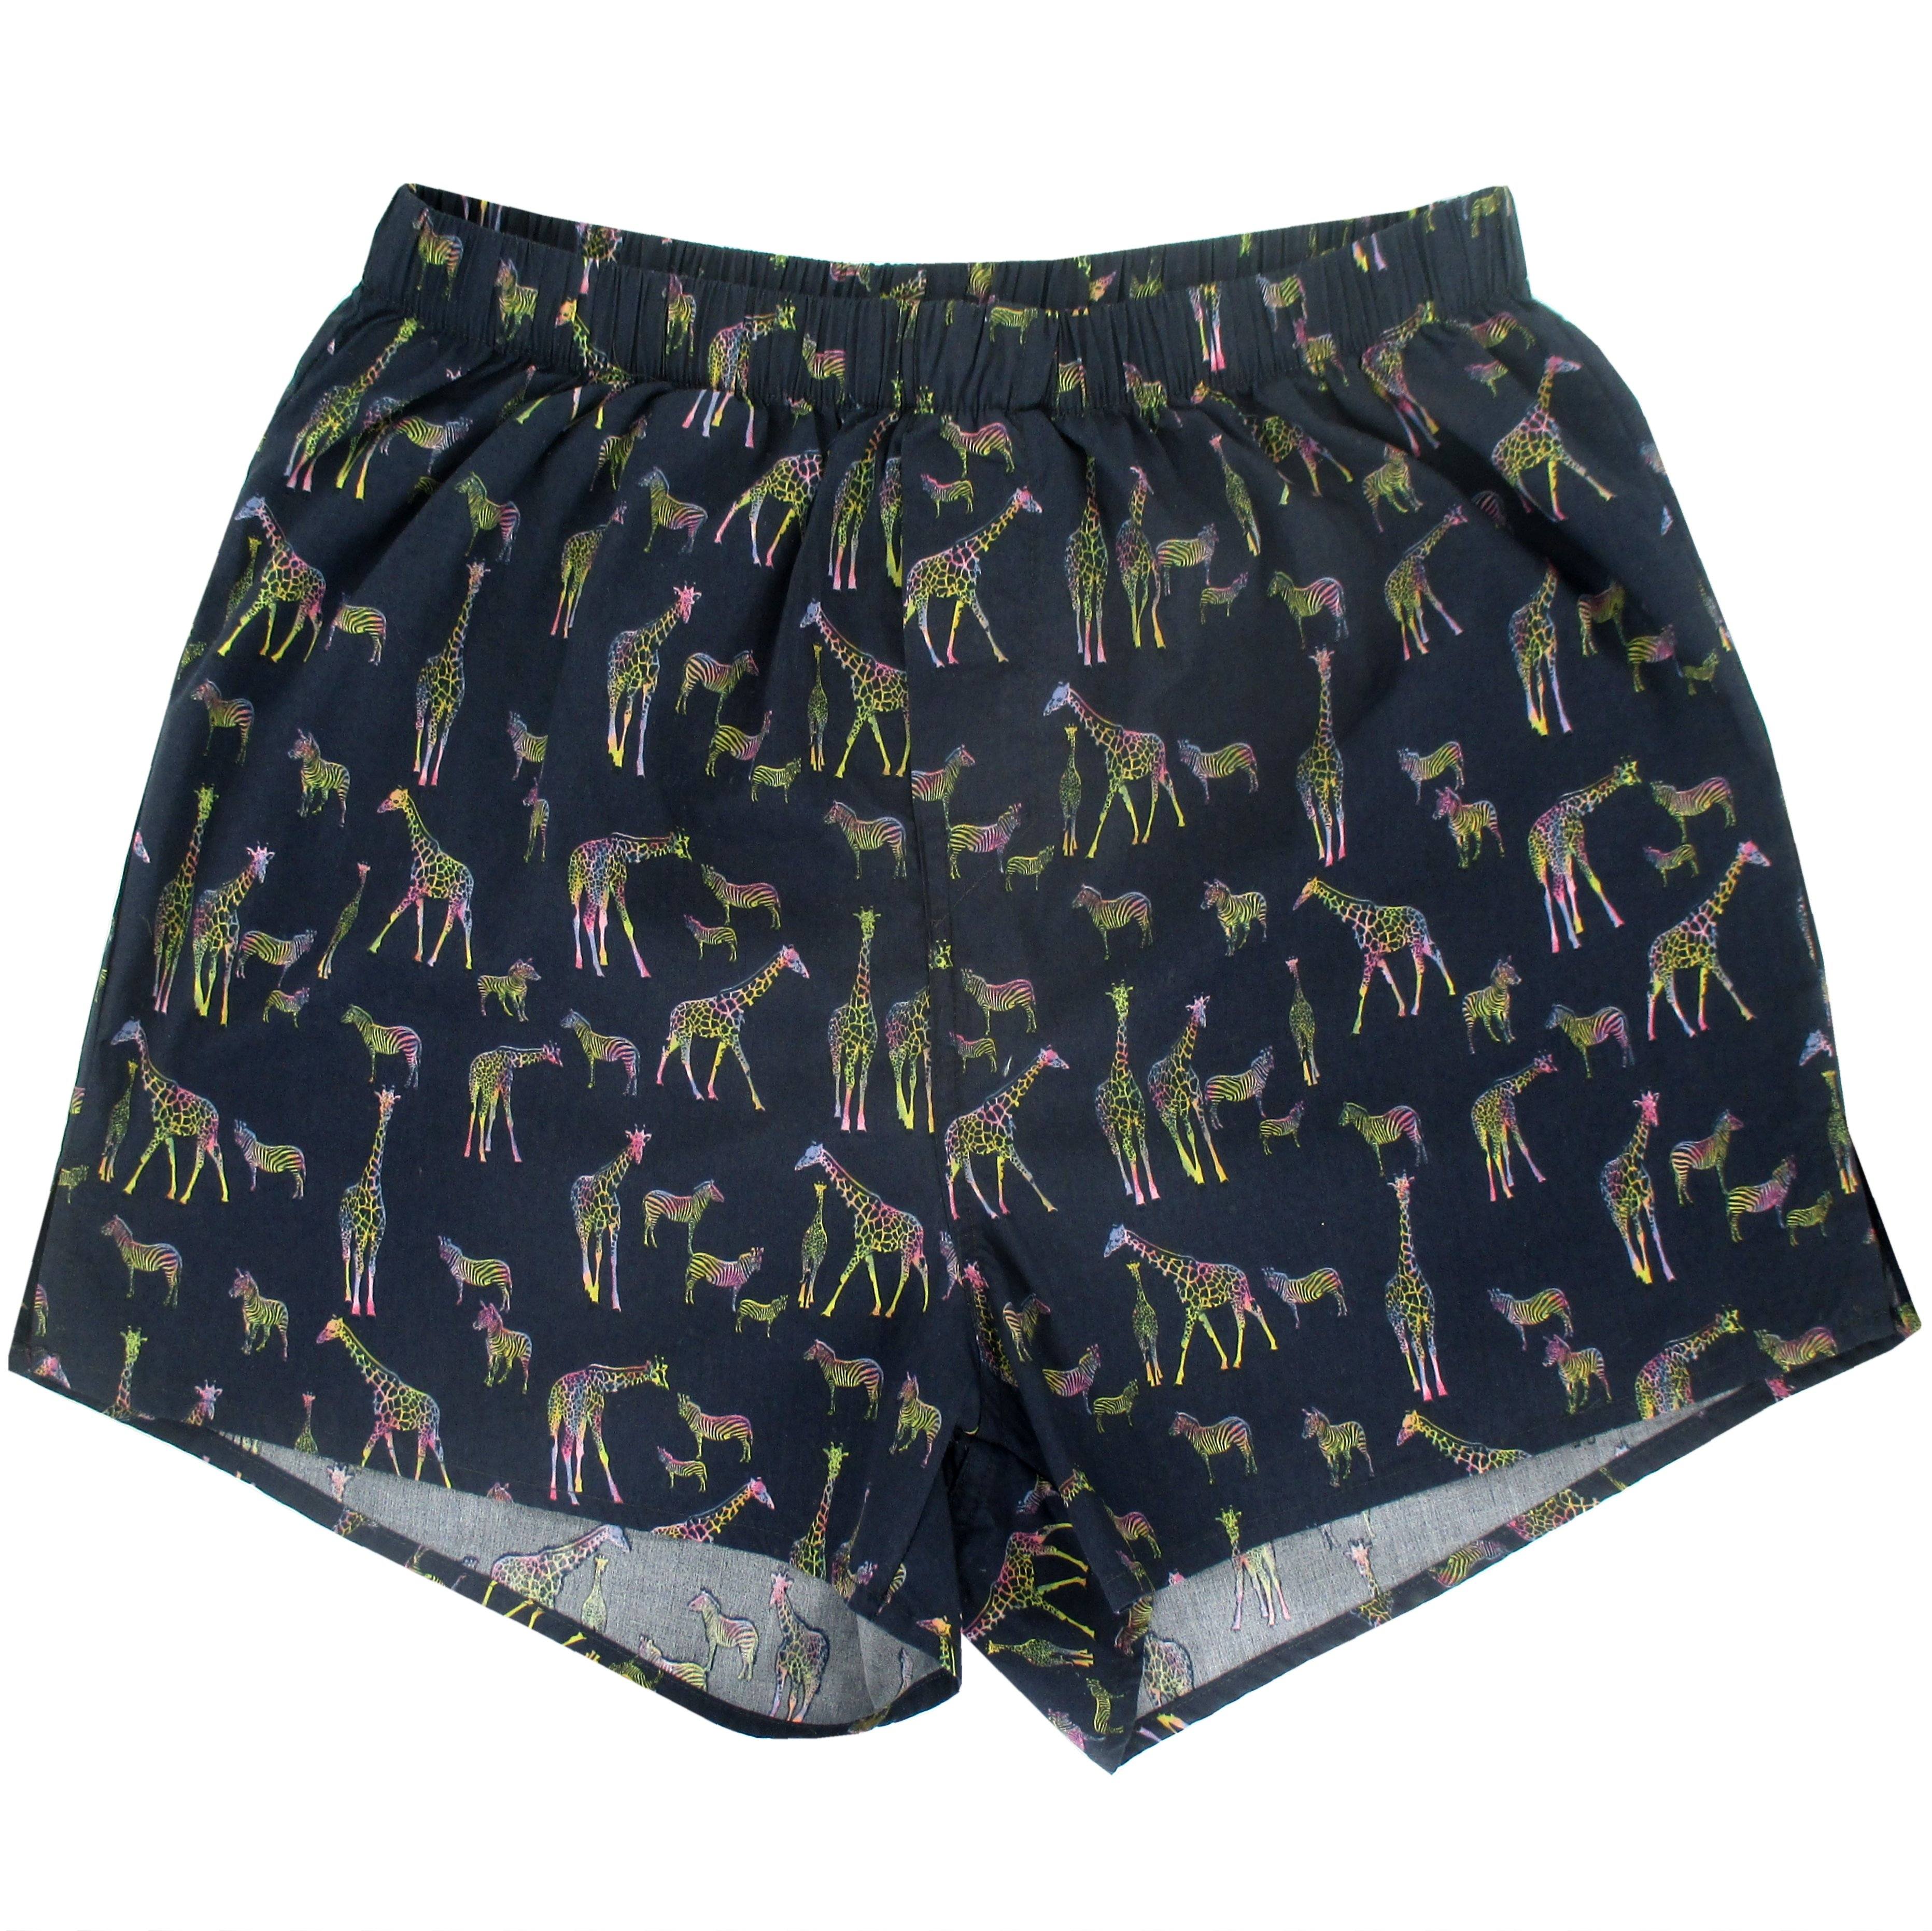 Men's Zebra Safari Print Boxer Shorts. Giraffe Patterned Boxers For Men